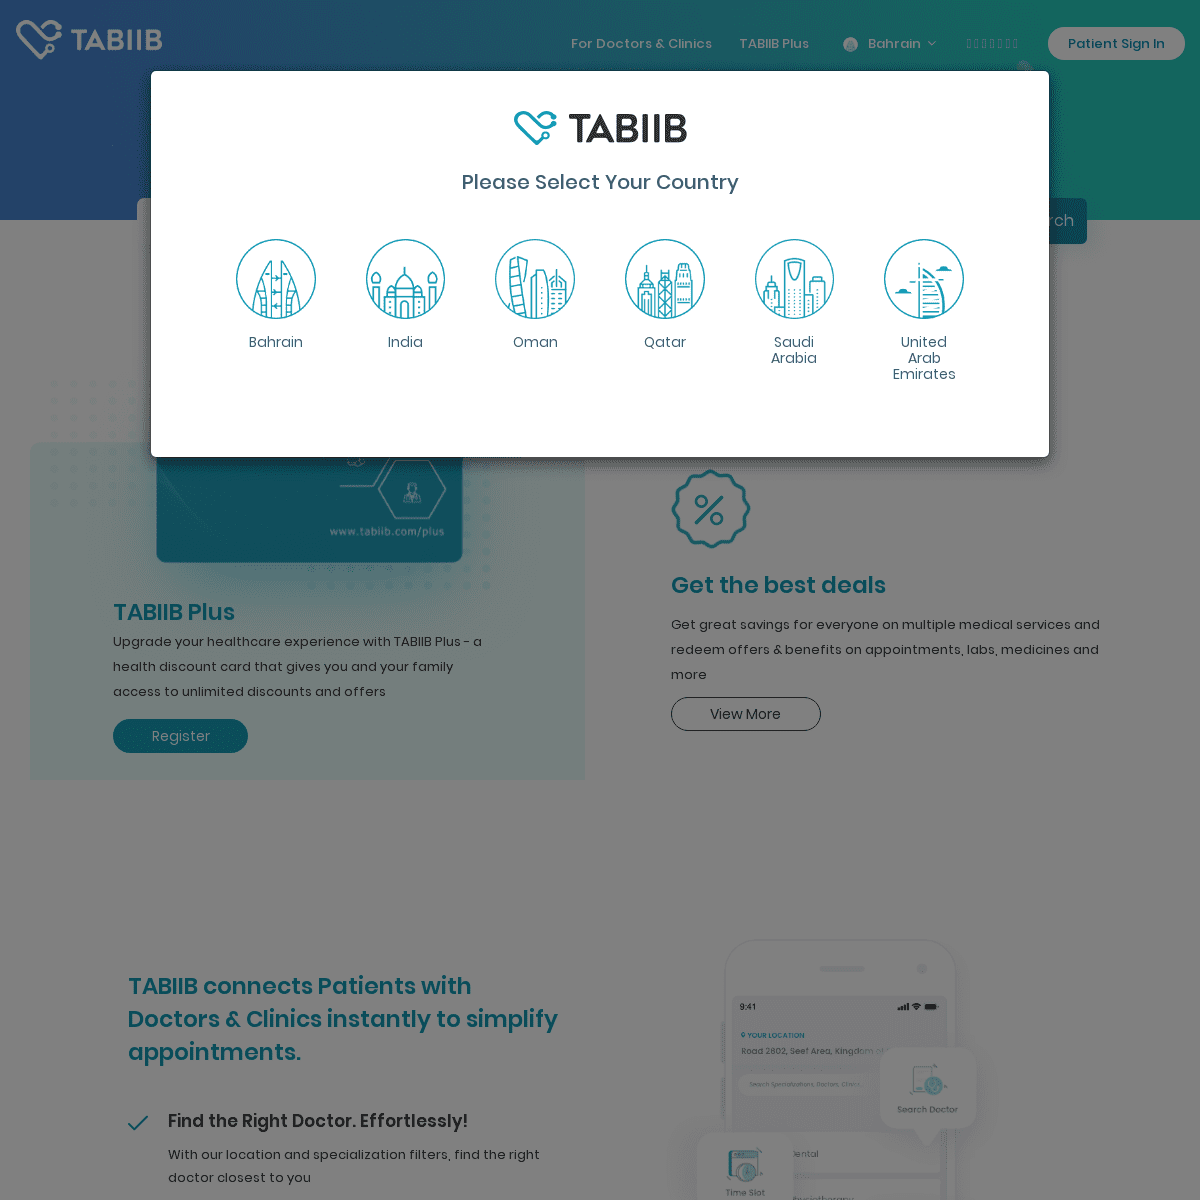 A complete backup of tabiib.com